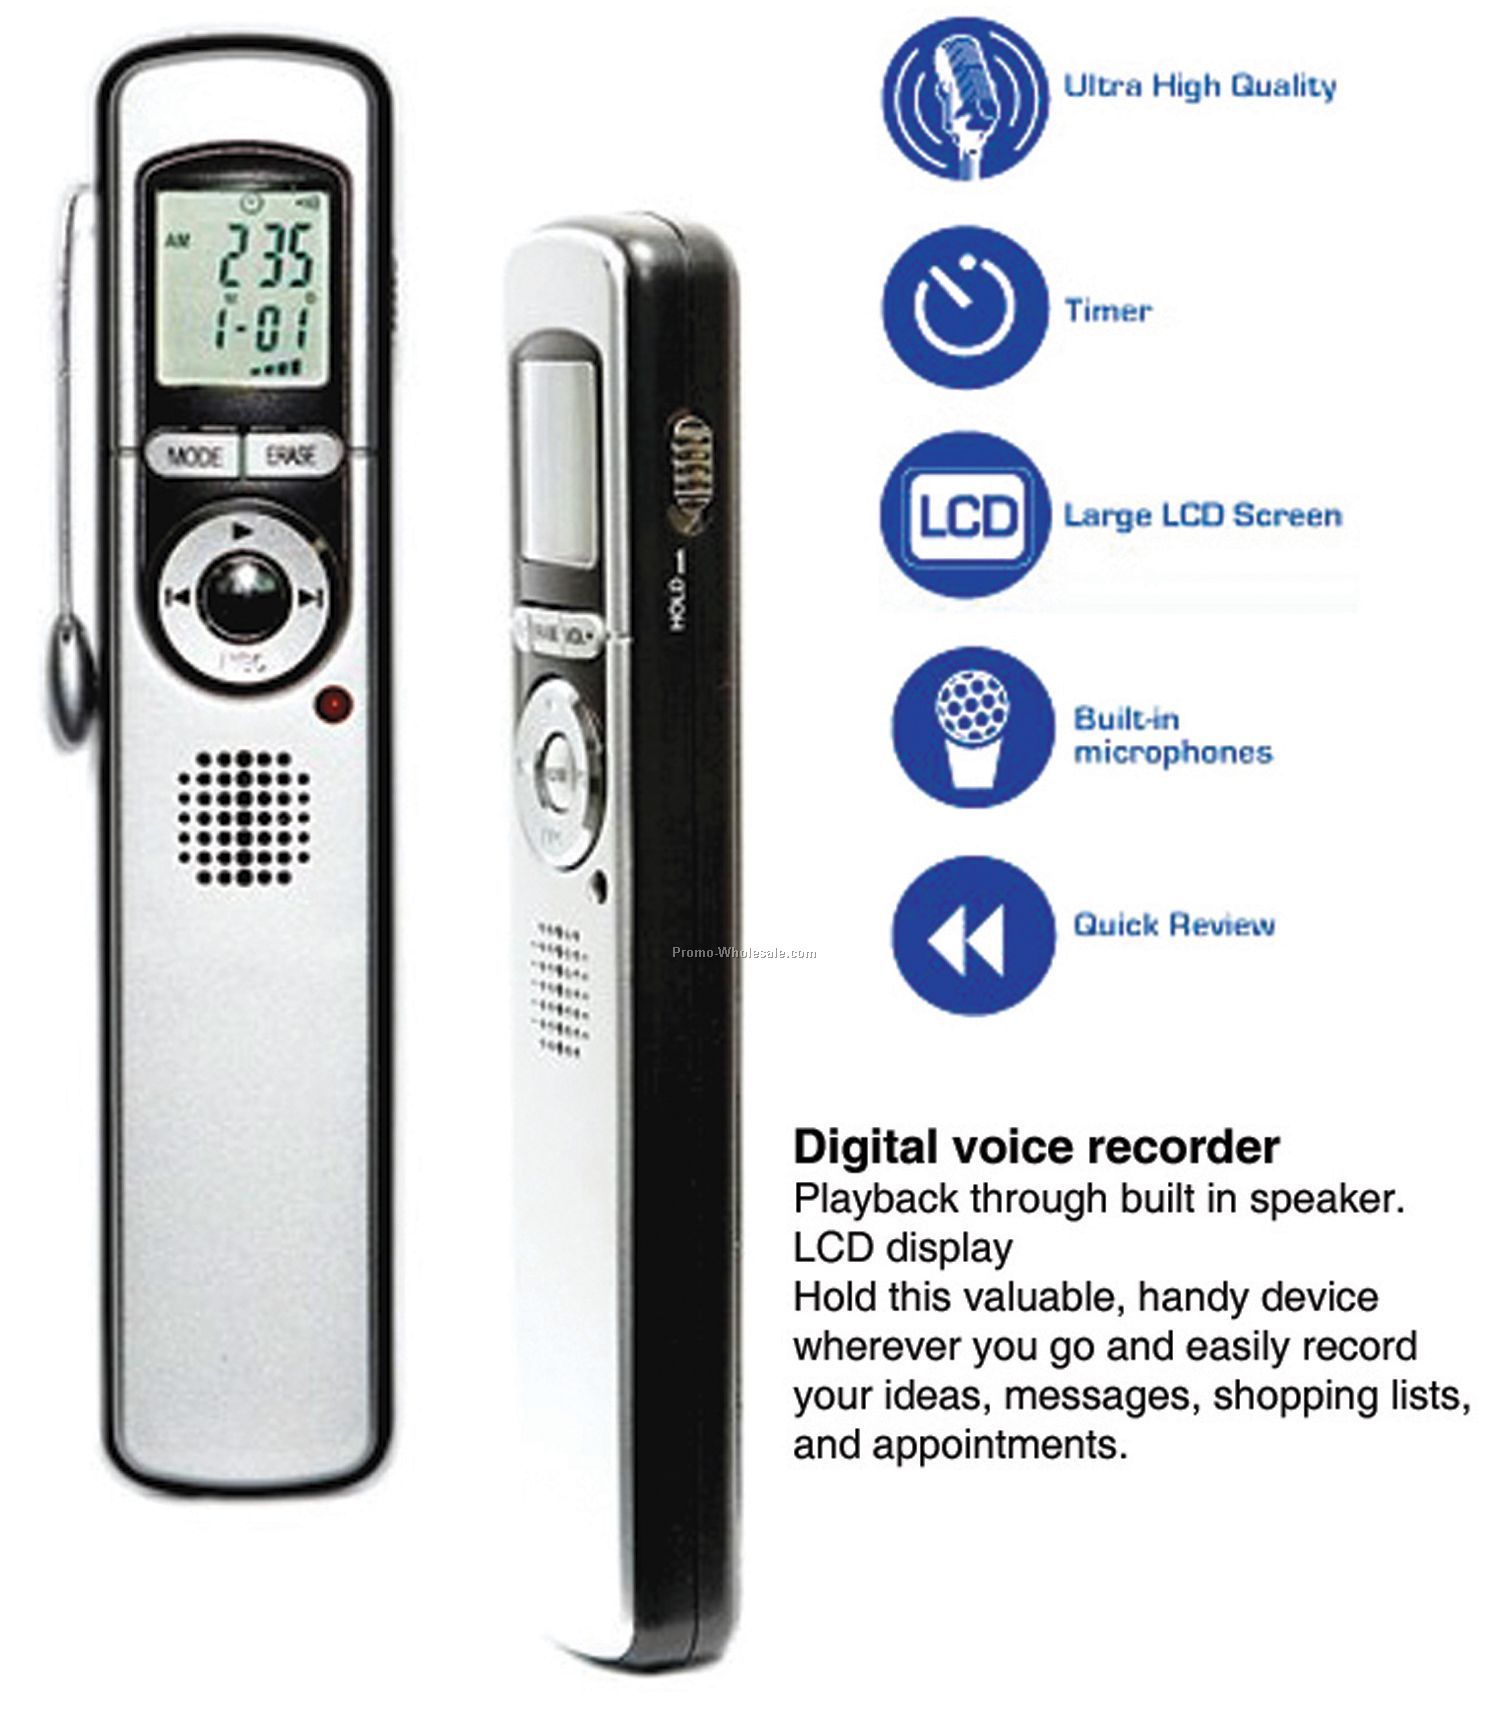 Digital Voice Recording (2.5 Minutes Recording Time)